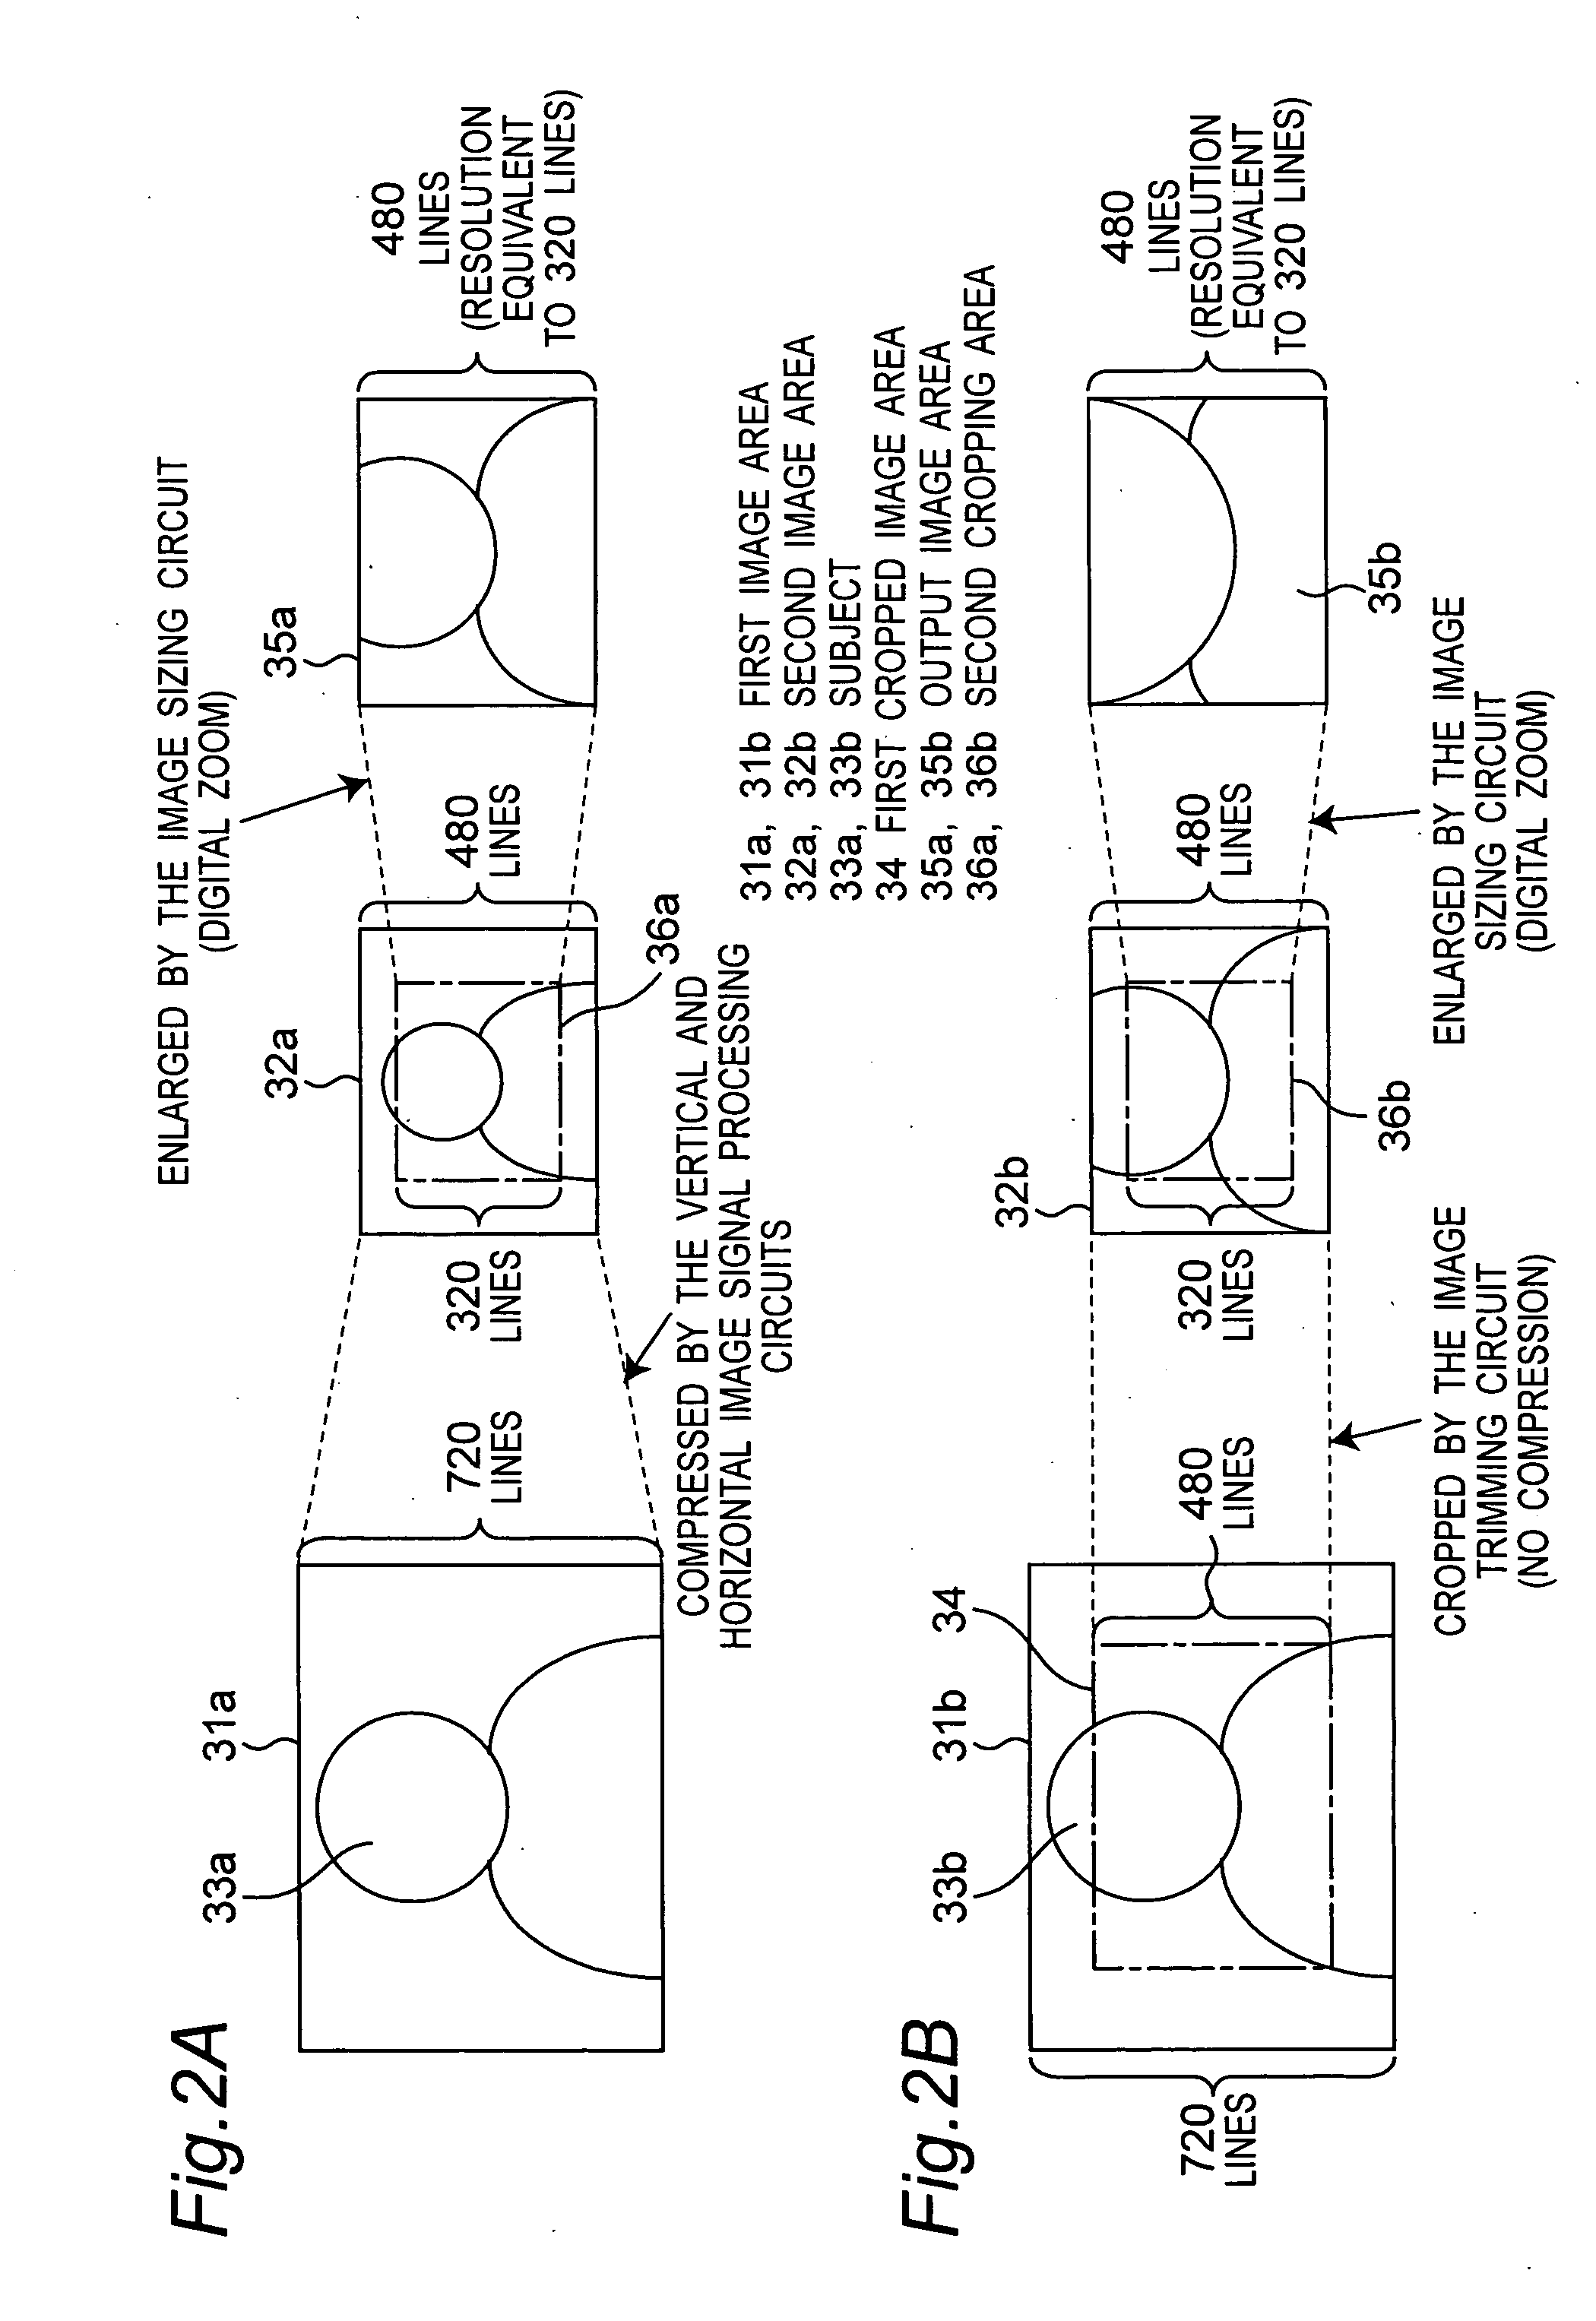 Image enlarging apparatus and method